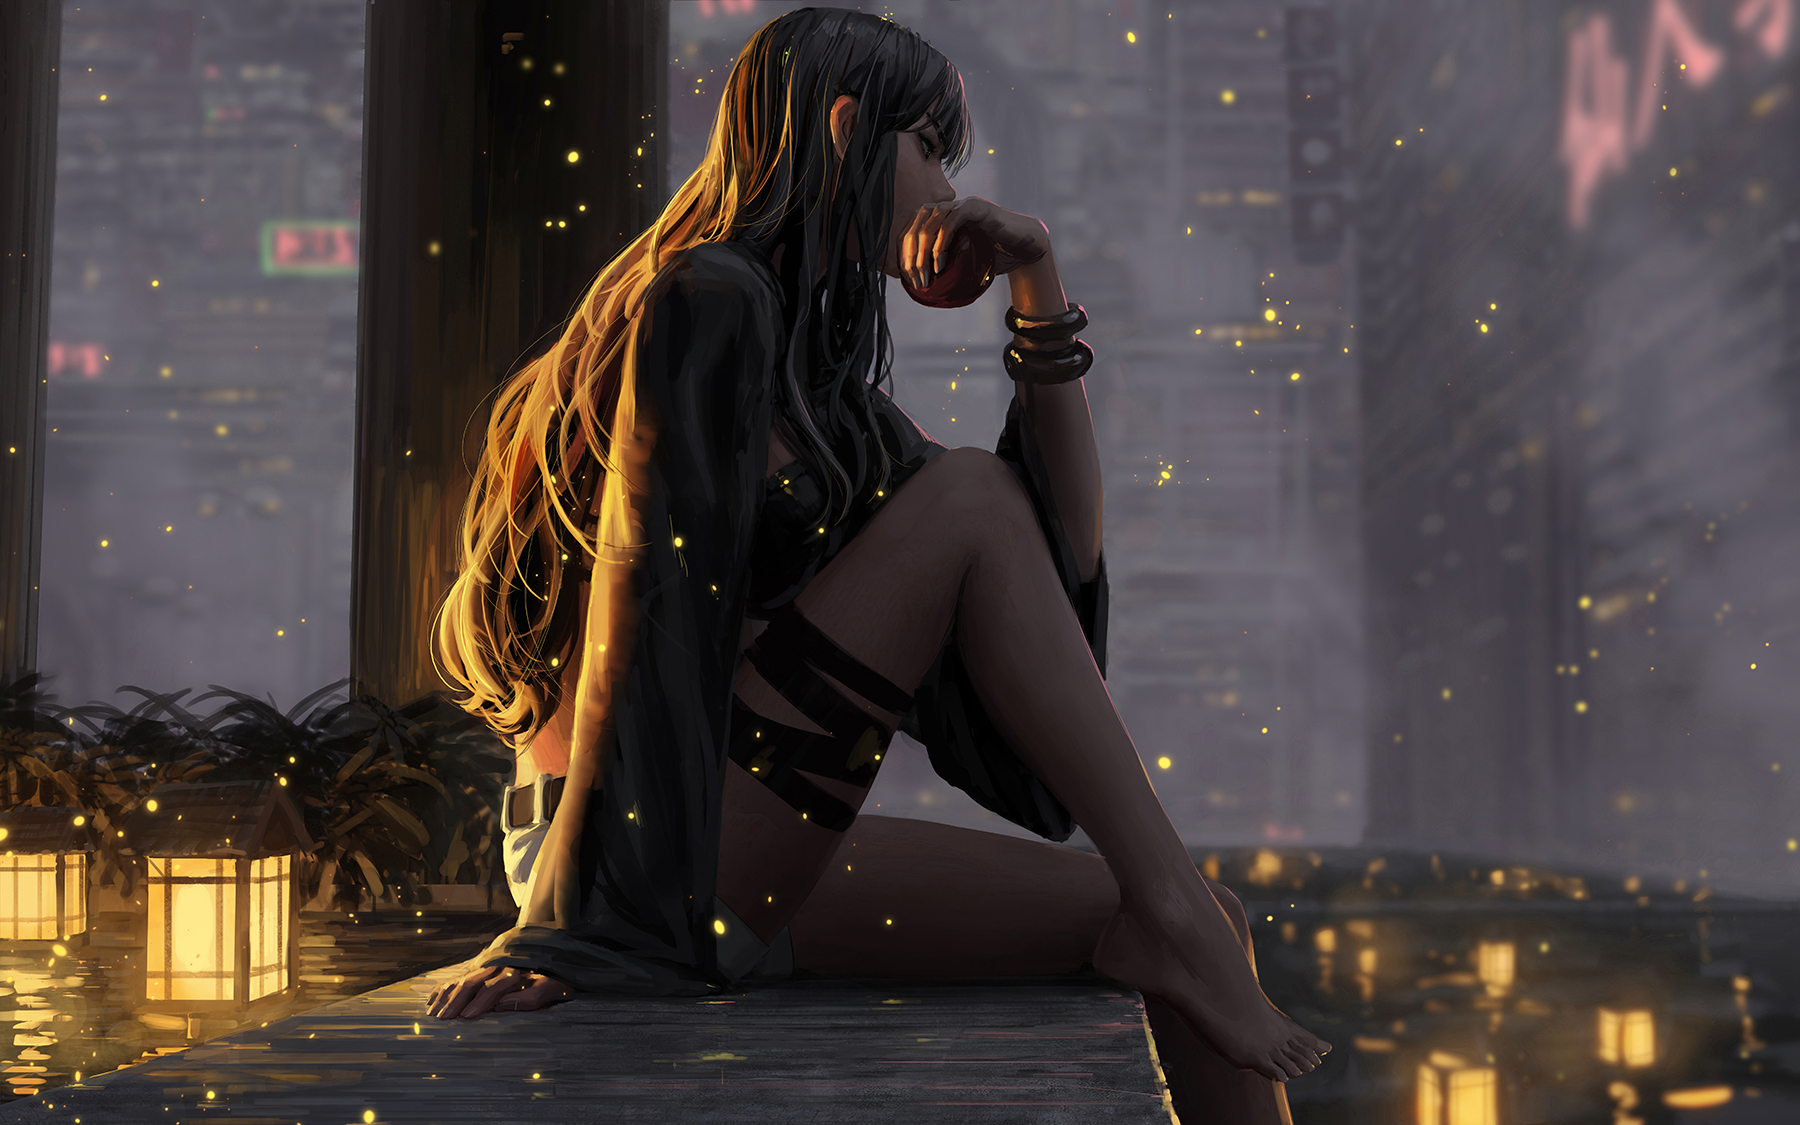 GUWEiZ Women Fictional Character Digital Painting Ledge Bent Legs Sitting Long Hair Artwork Digital  1800x1125